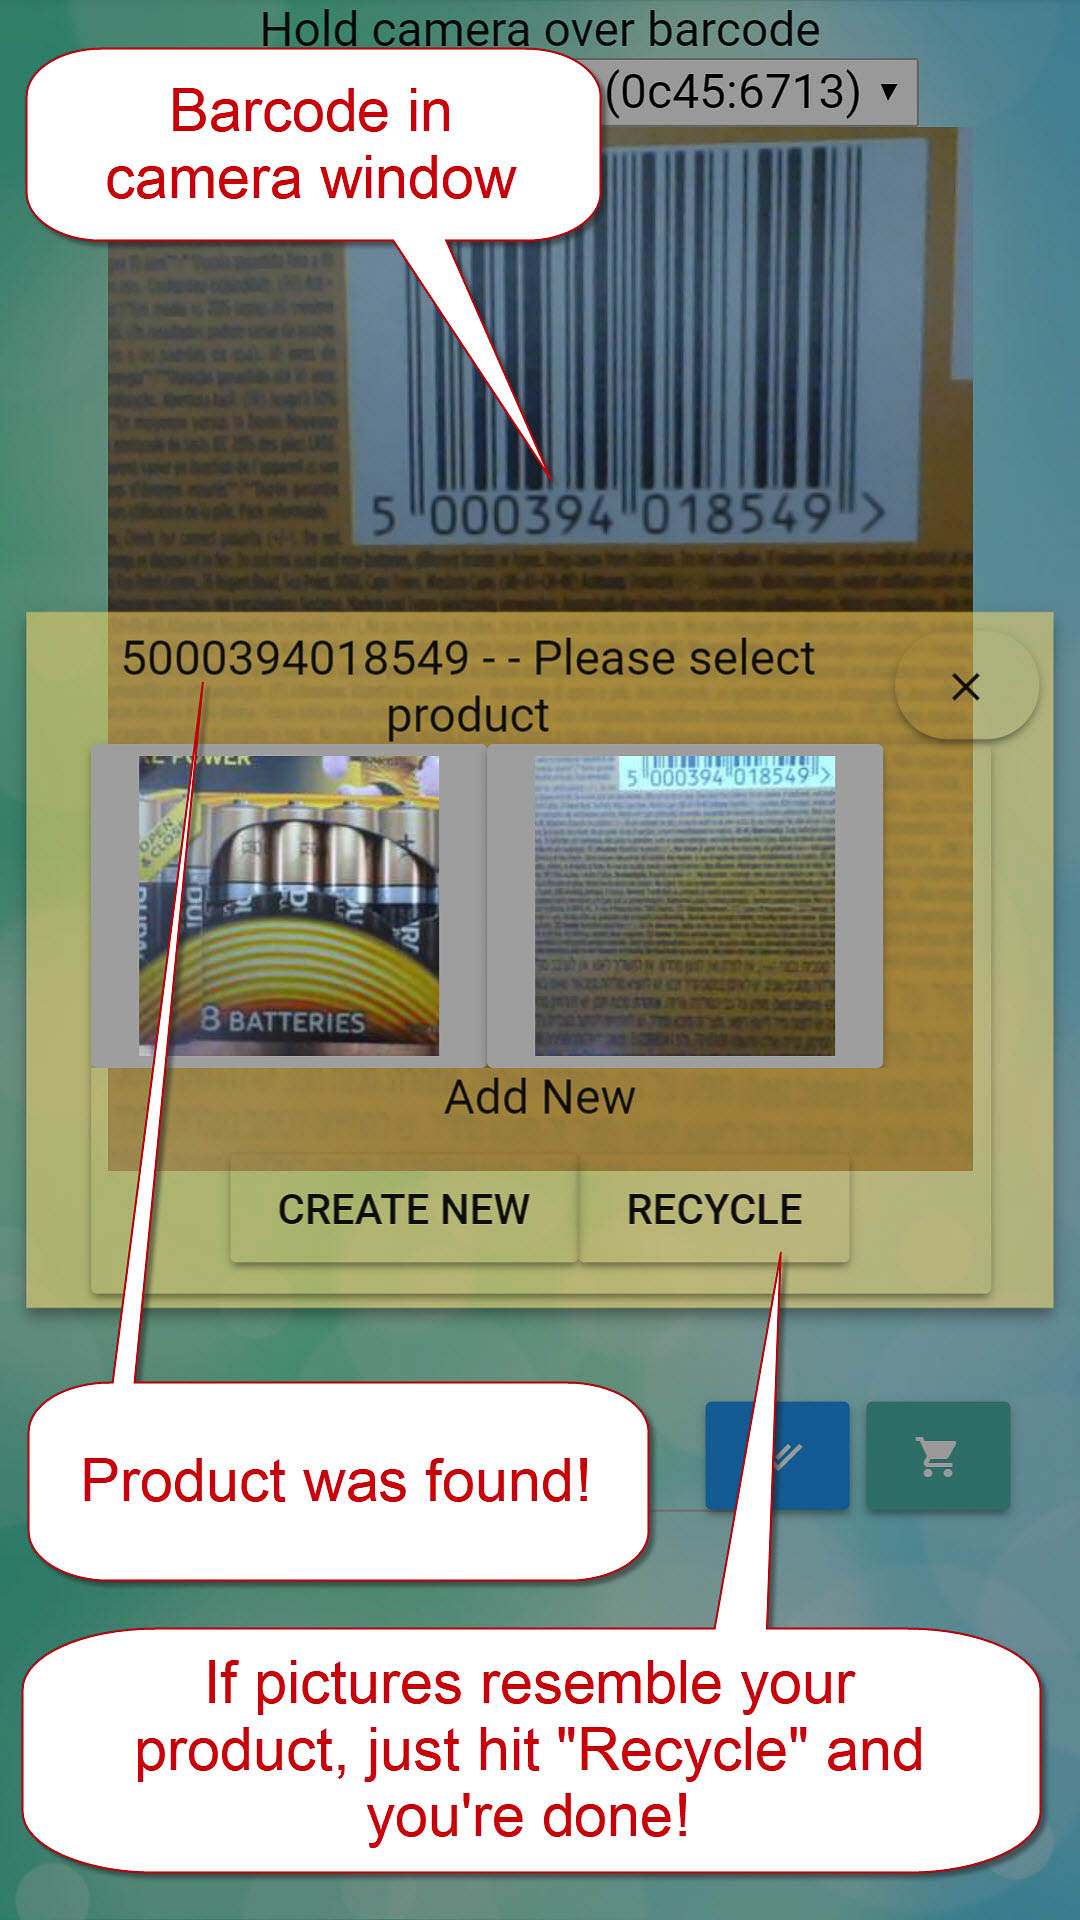 Tropfen- Produkt Barcode scannen – neues Produkt